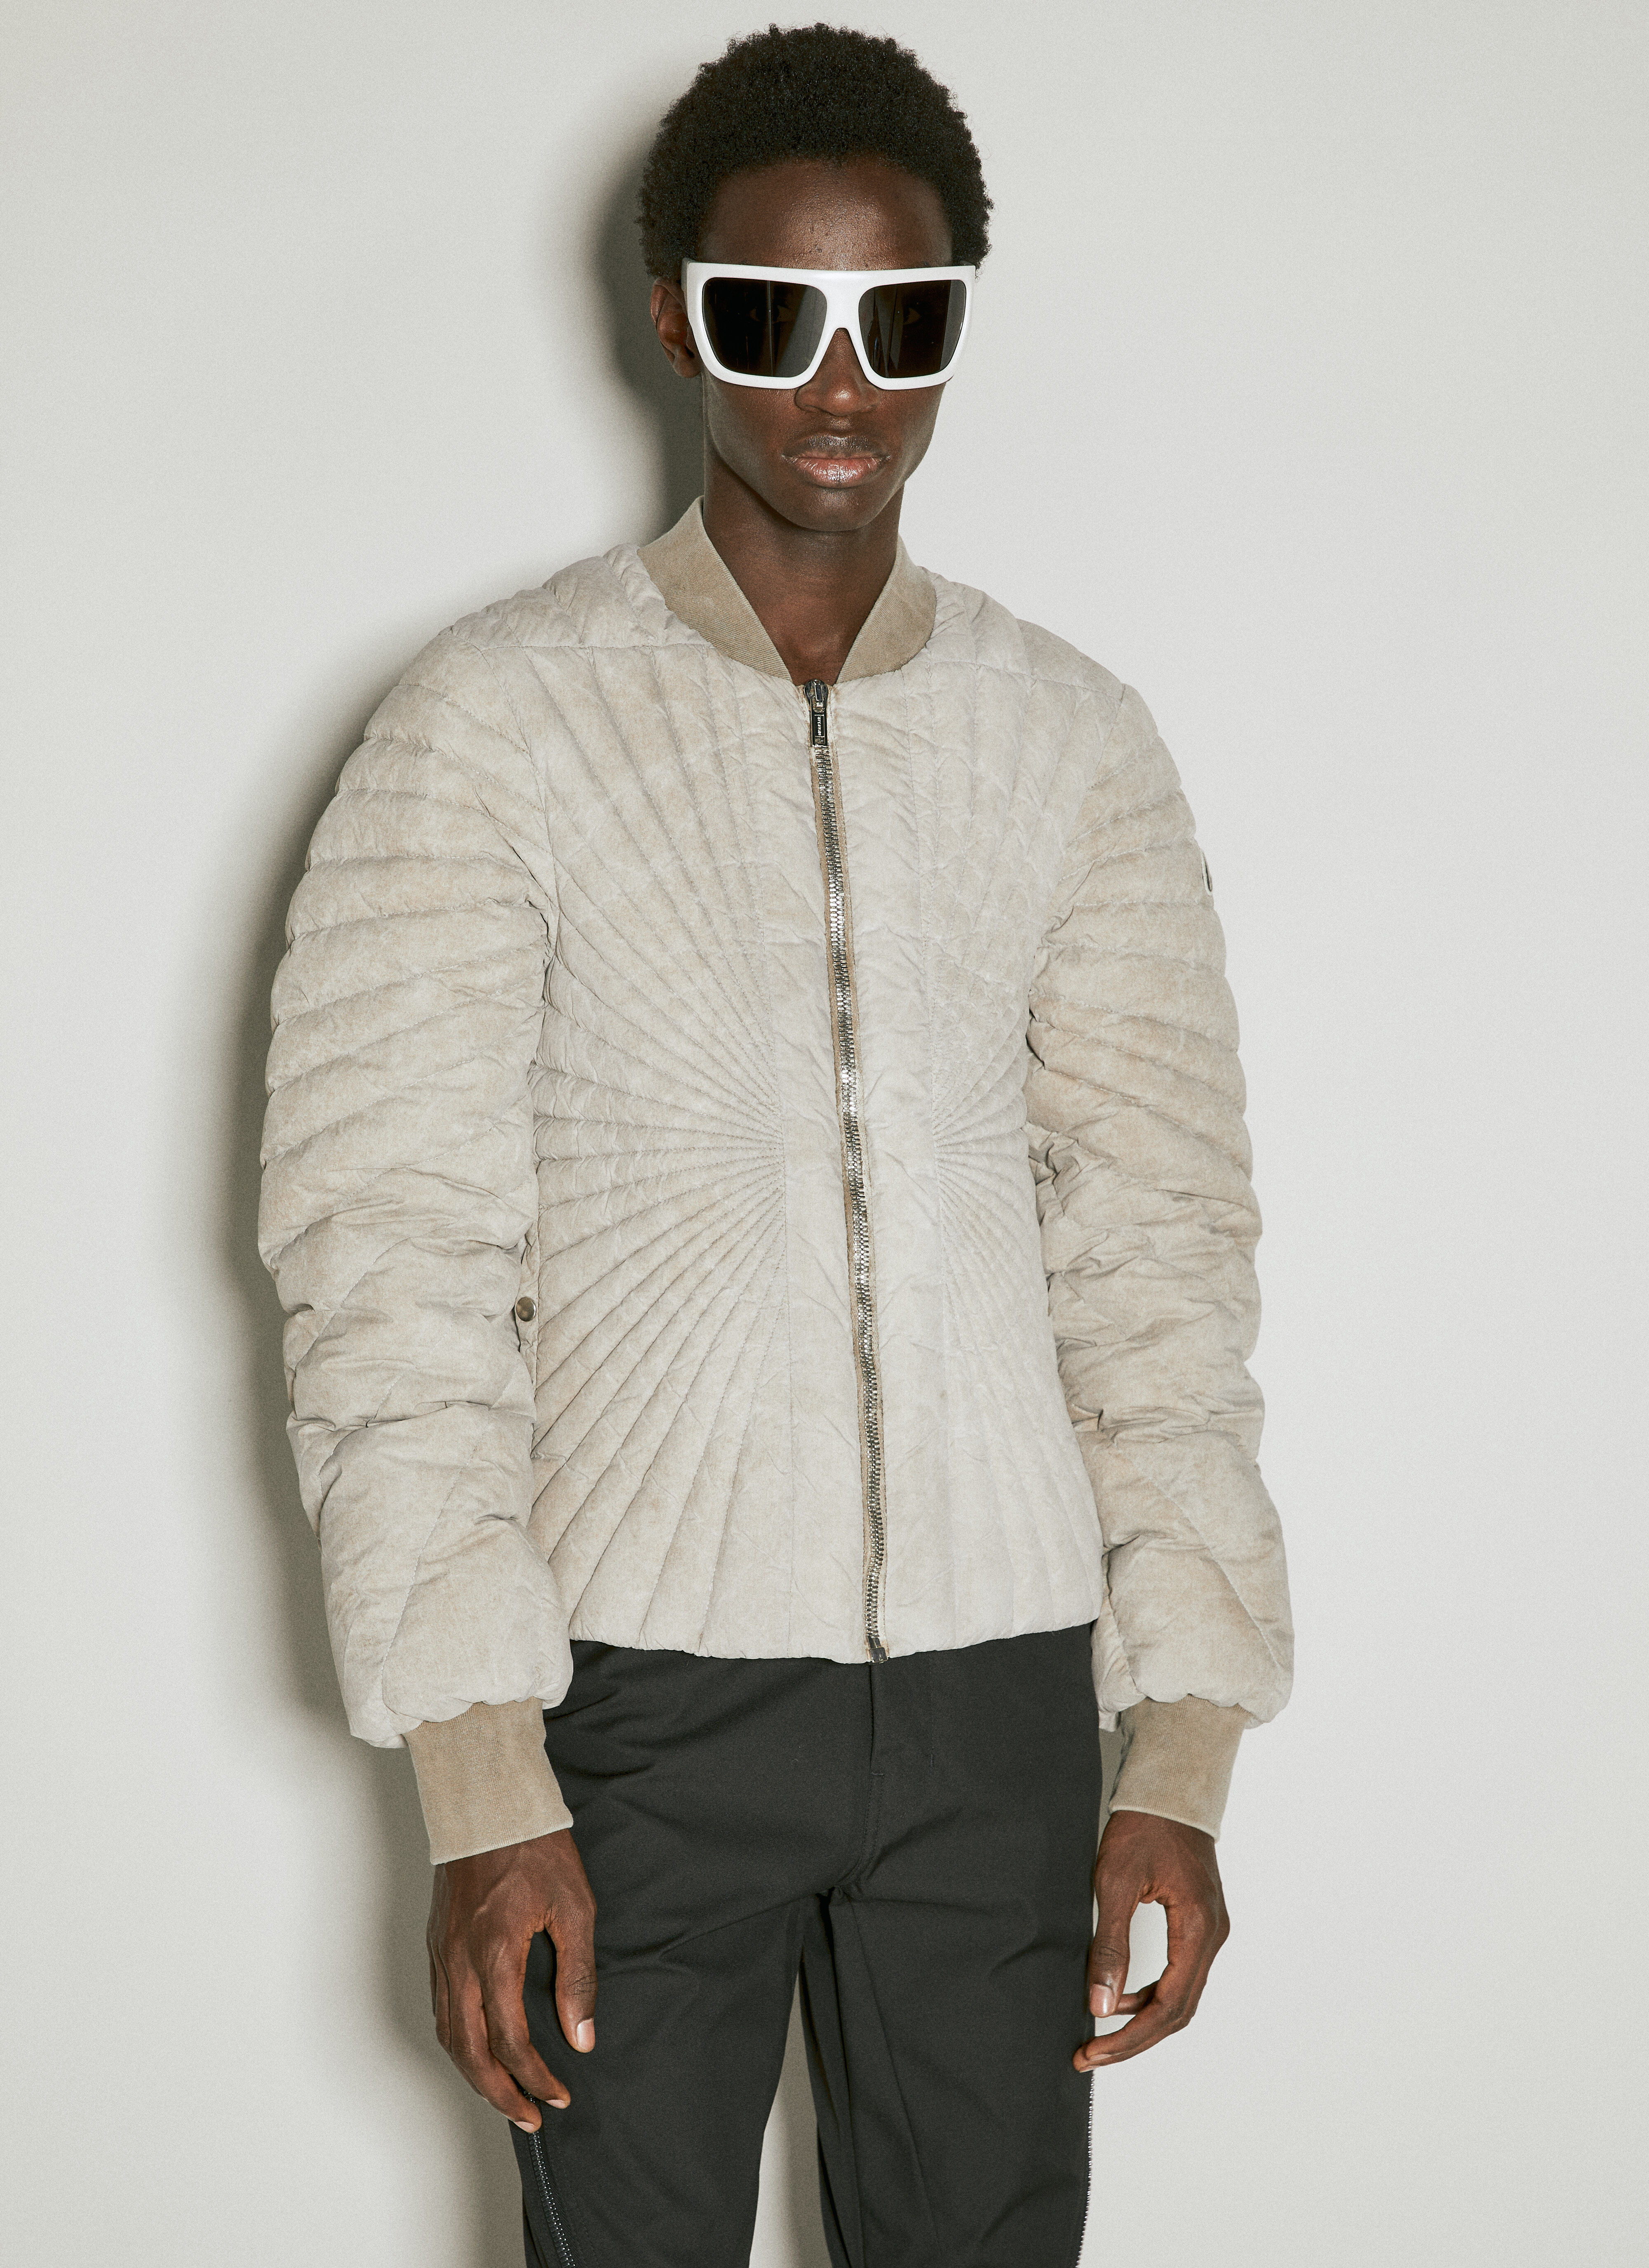 Moncler x Roc Nation designed by Jay-Z ラディアンス ダウン フライトジャケット ブラック mrn0156002